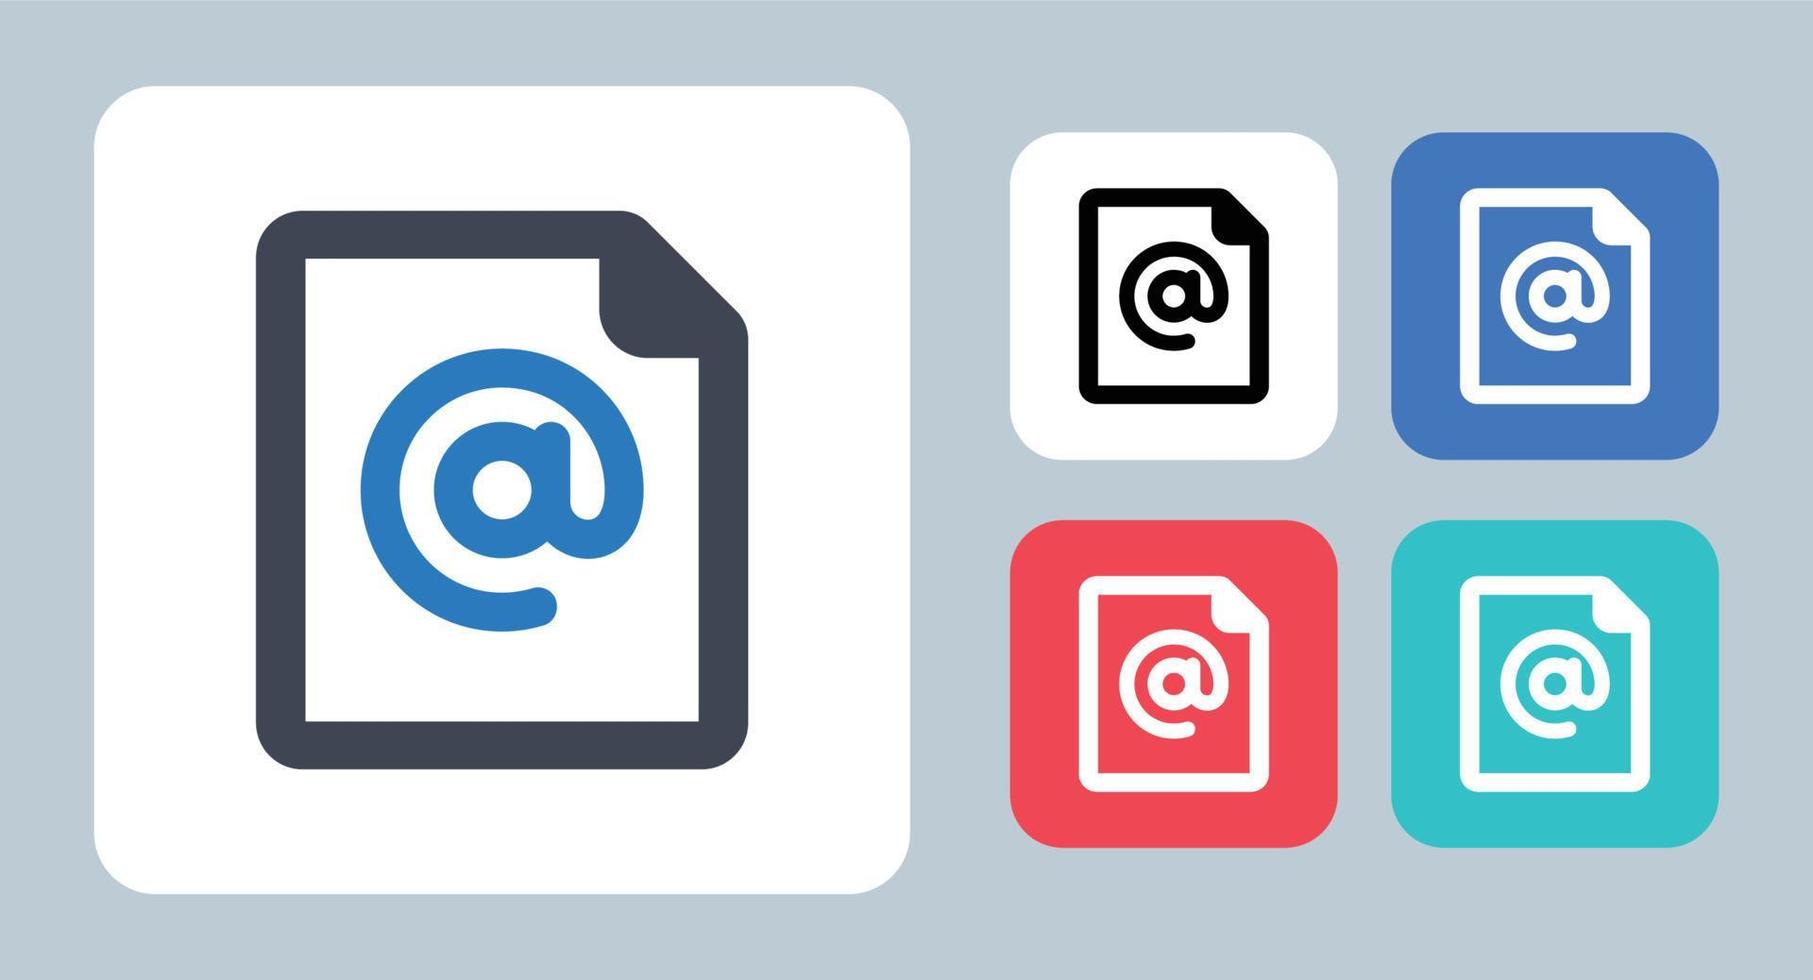 E-Mail-Symbol - Vektor-Illustration. e-mail, mail, datei, dokument, brief, post, kontakt, nachricht, adresse, linie, umriss, flach, symbole . vektor